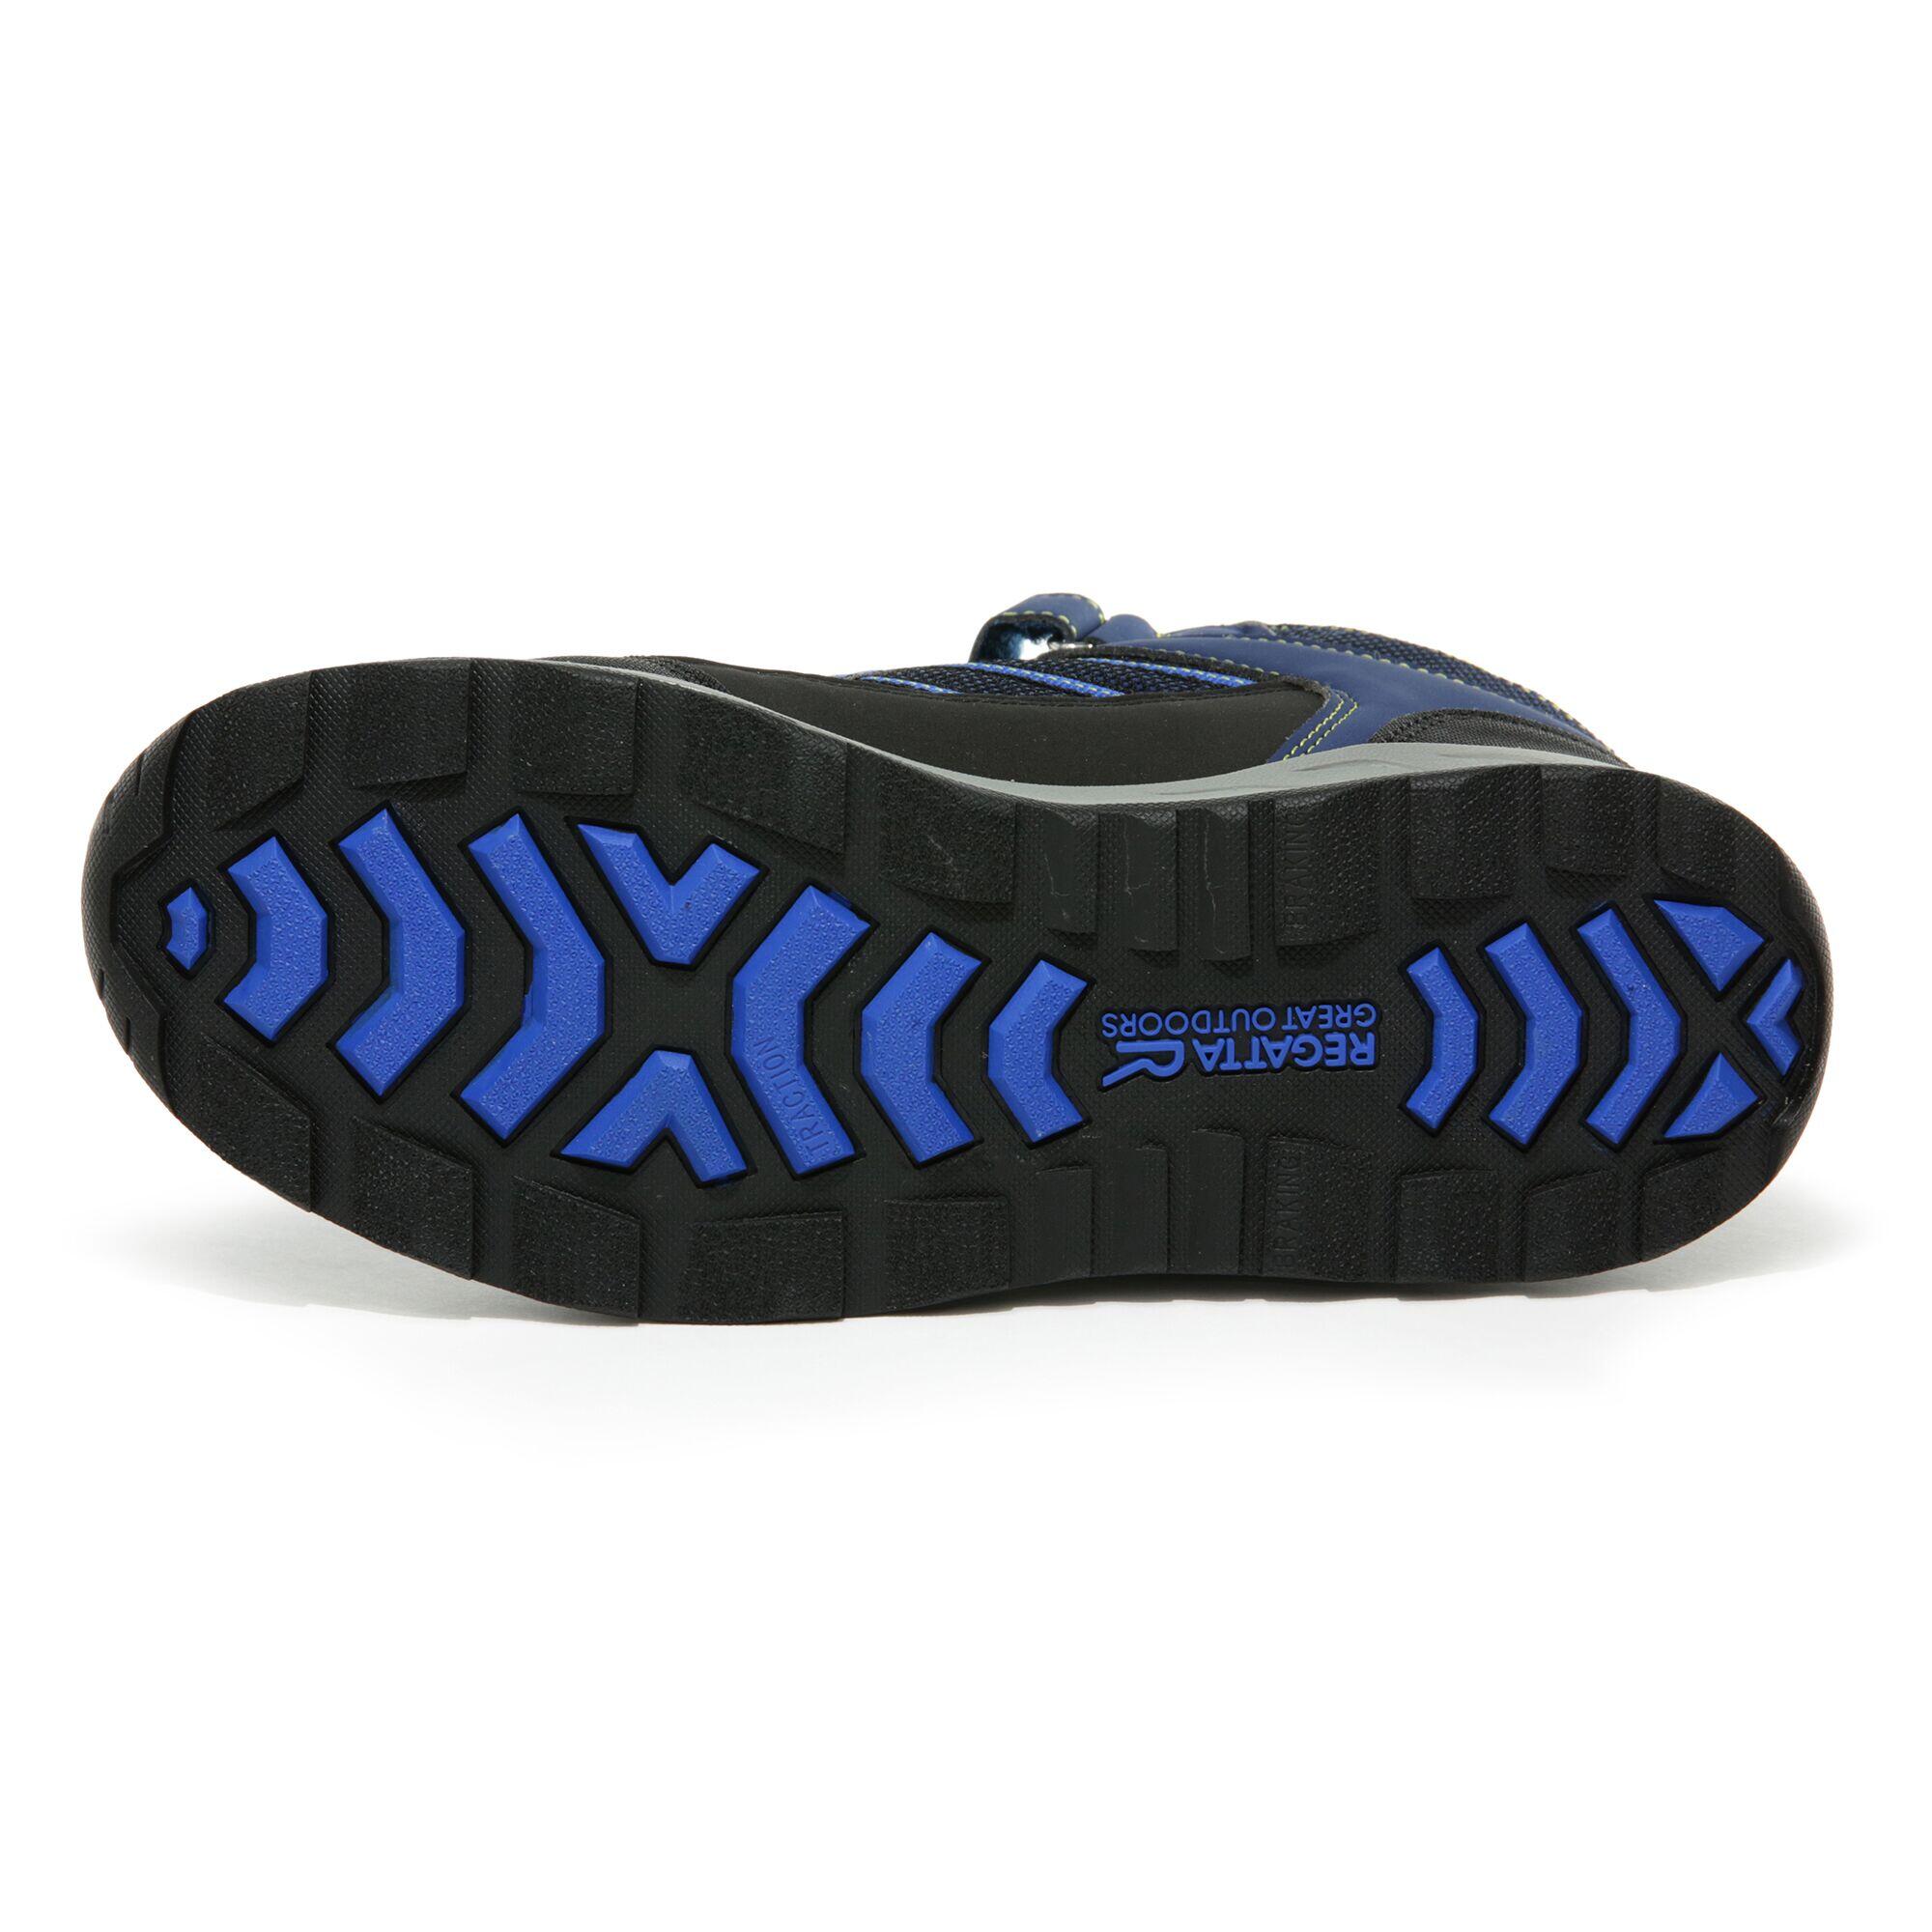 Samaris V Kids' Hiking Waterproof Mid Boots - Dark Blue/Neon Yellow 5/6